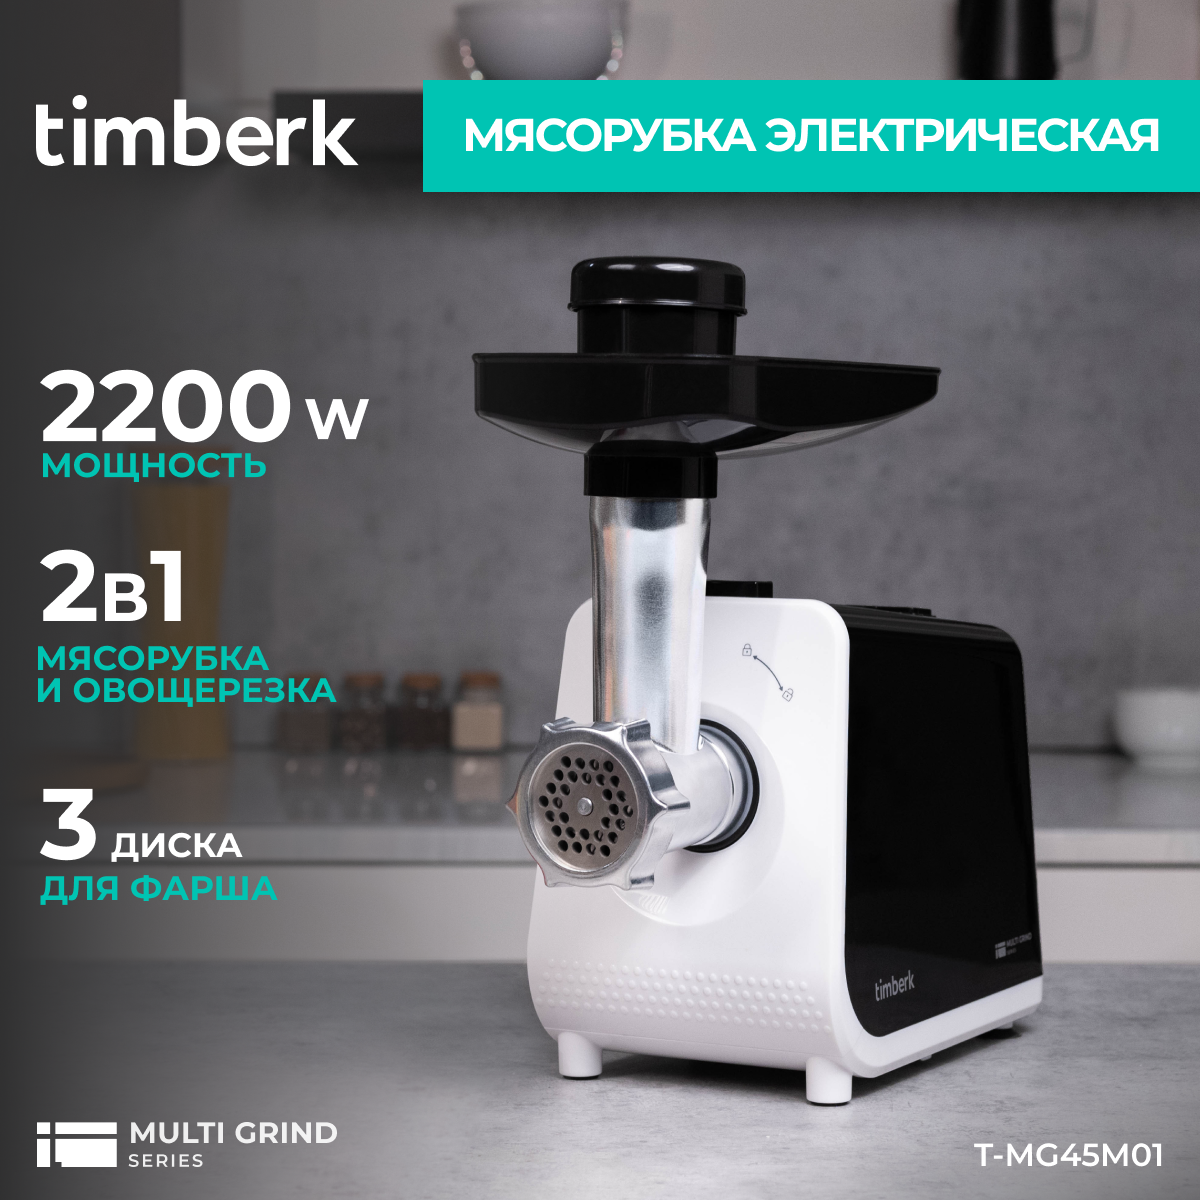 Электромясорубка Timberk T-MG45M01 450 Вт белая, черная